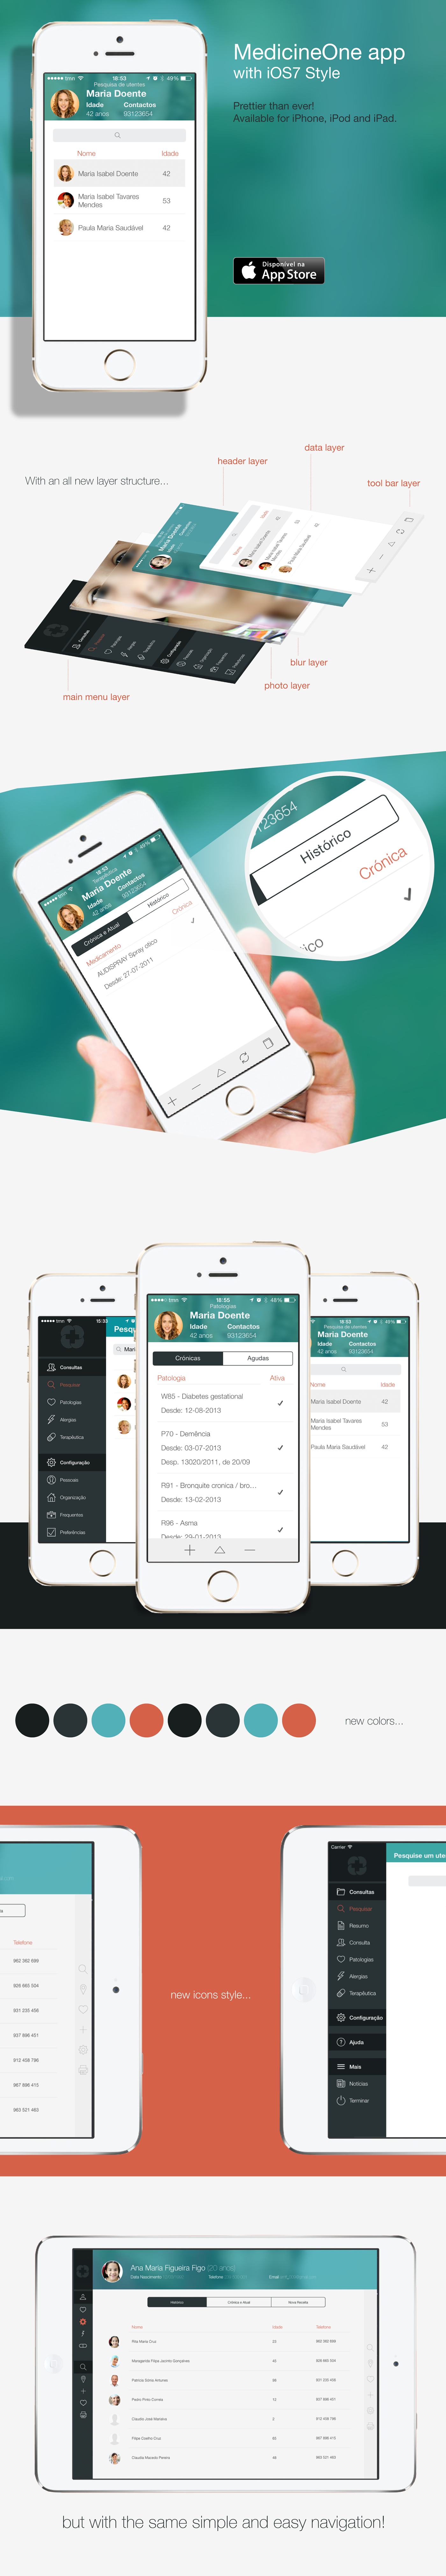 MedicineOne app ios7 Health doctor hospital Layout device women